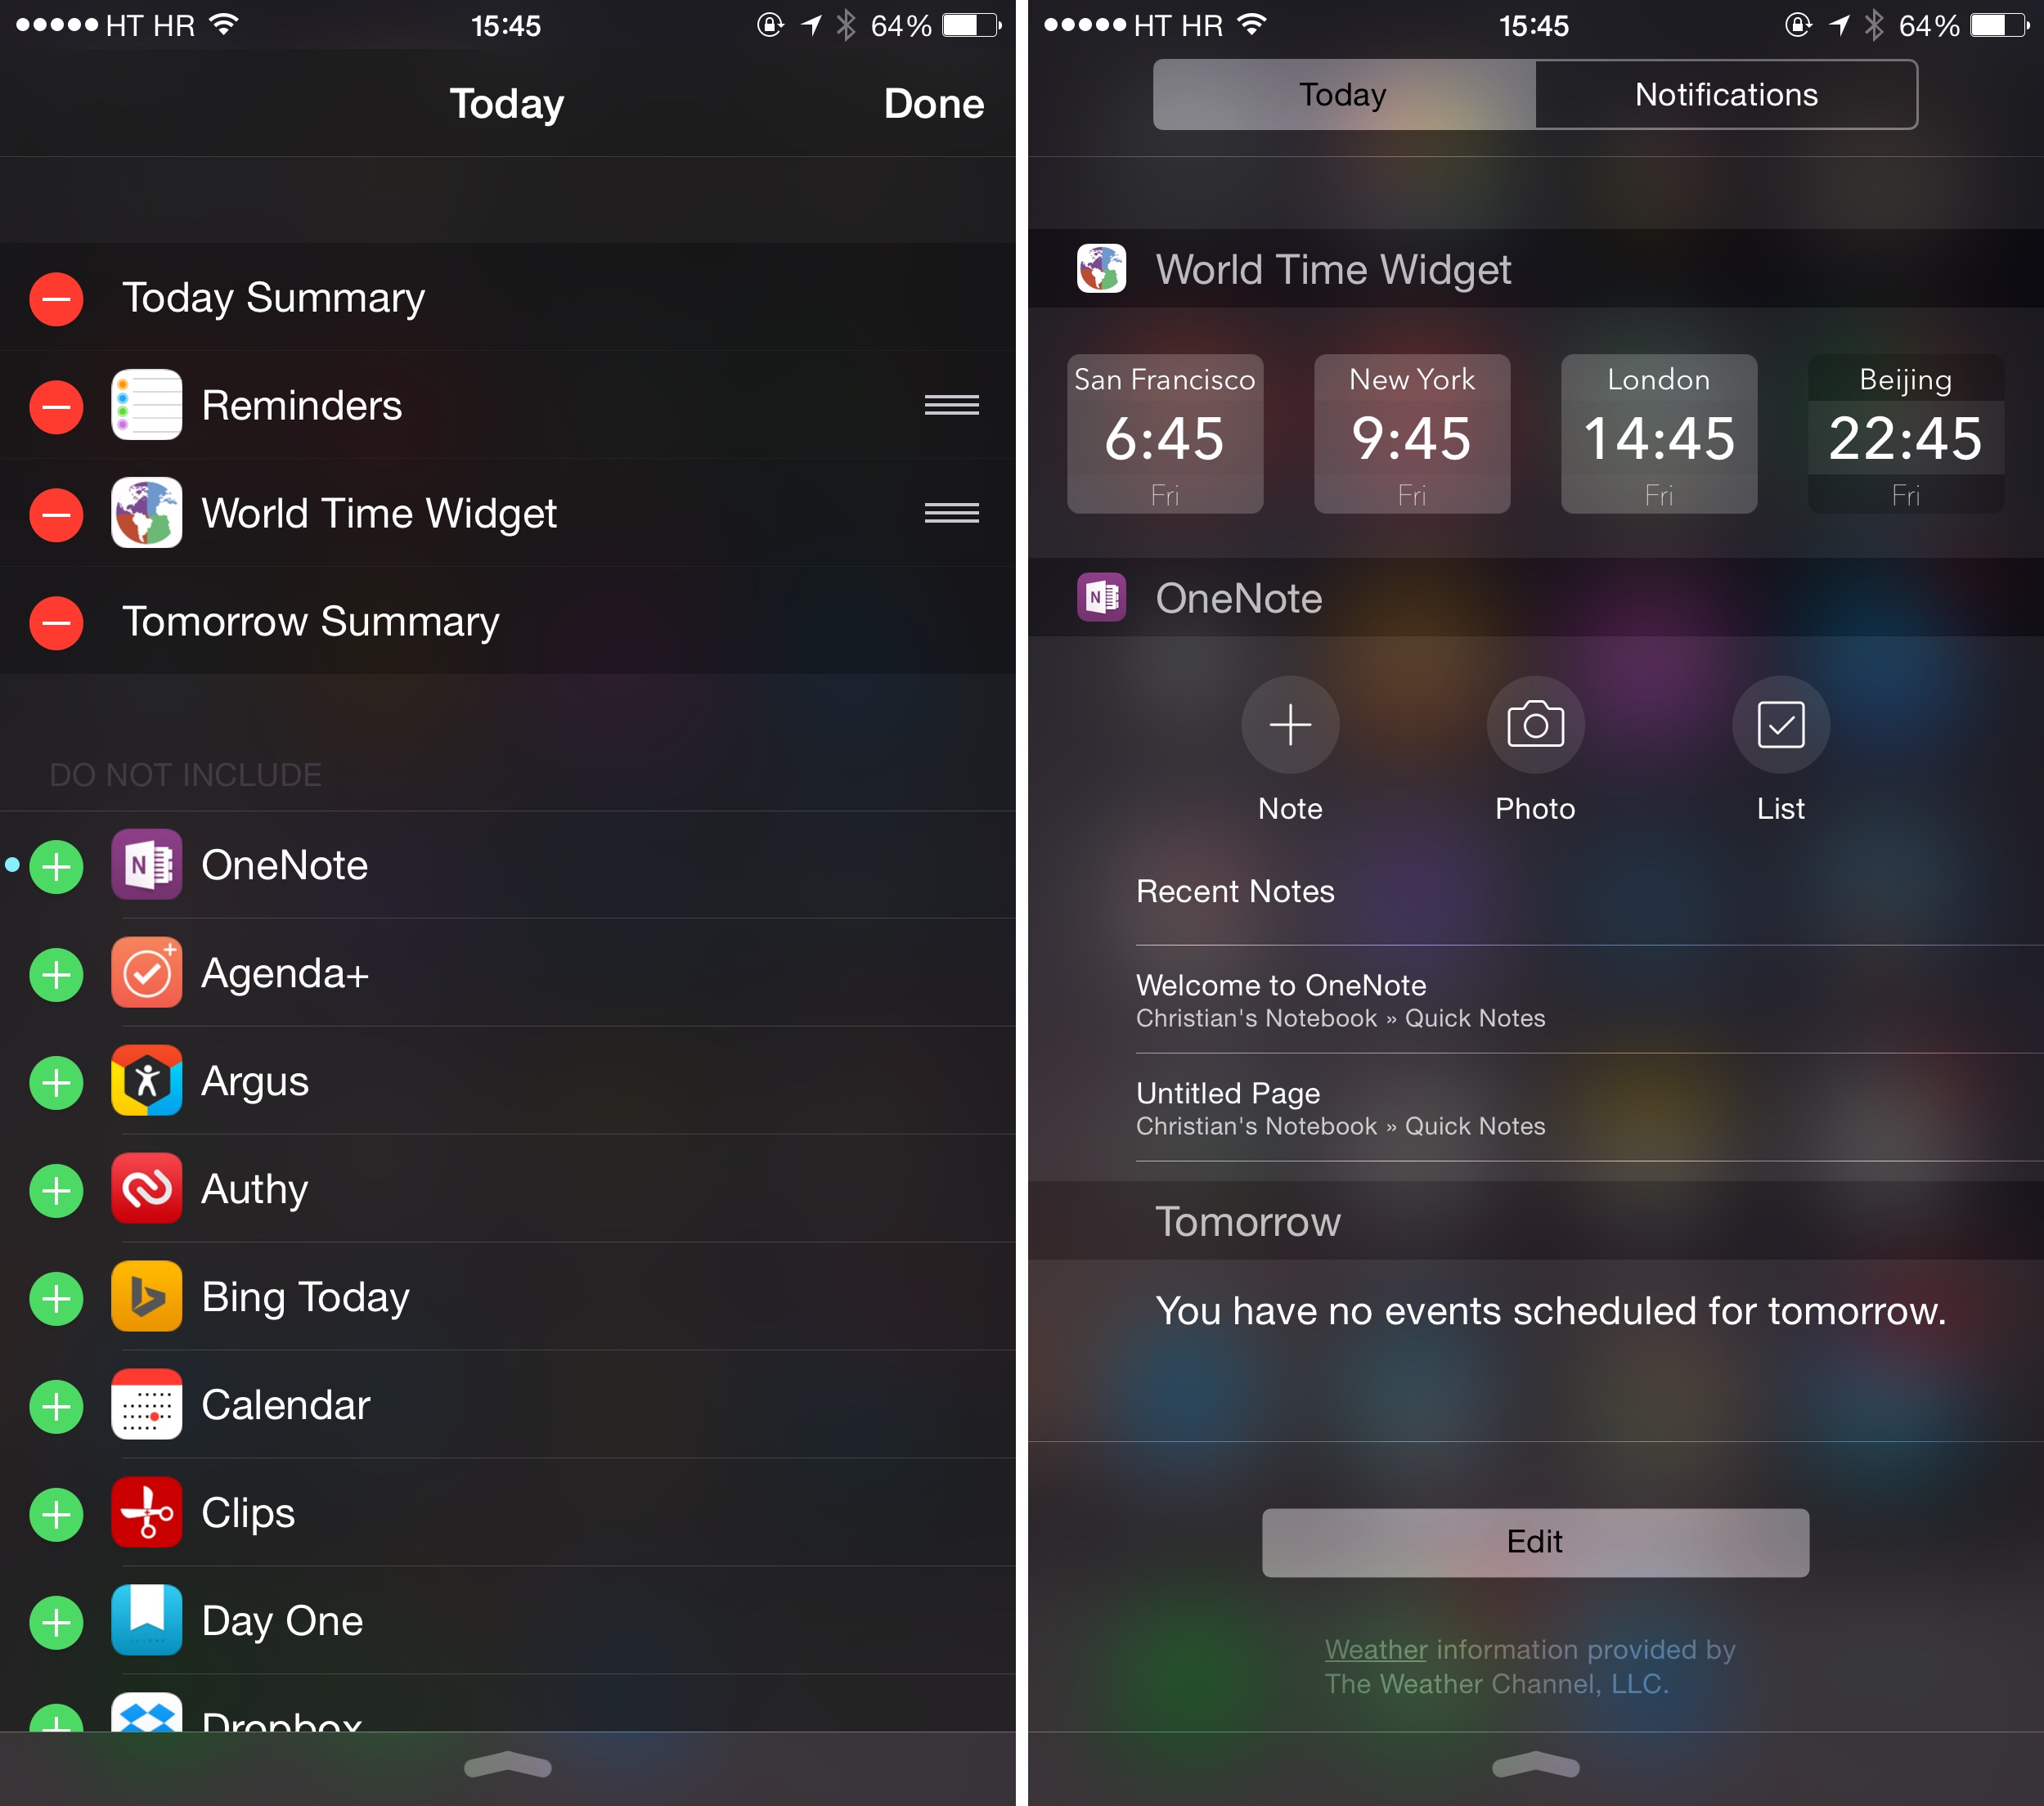 Microsoft OneNote 2.8 for iOS iPhone screenshot Today widget